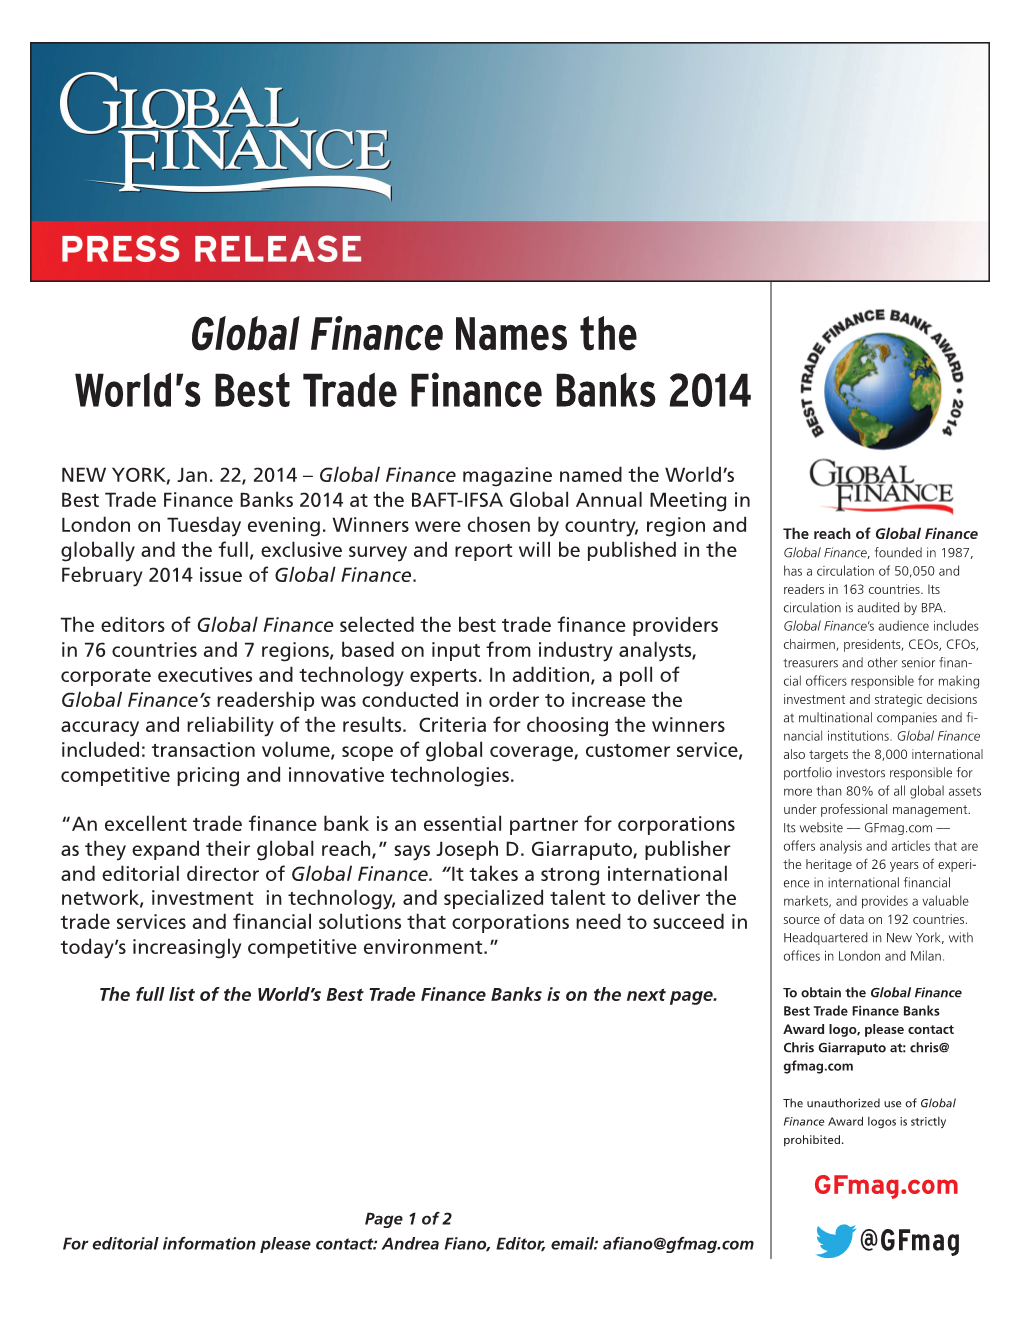 Global Finance Names the World's Best Trade Finance Banks 2014